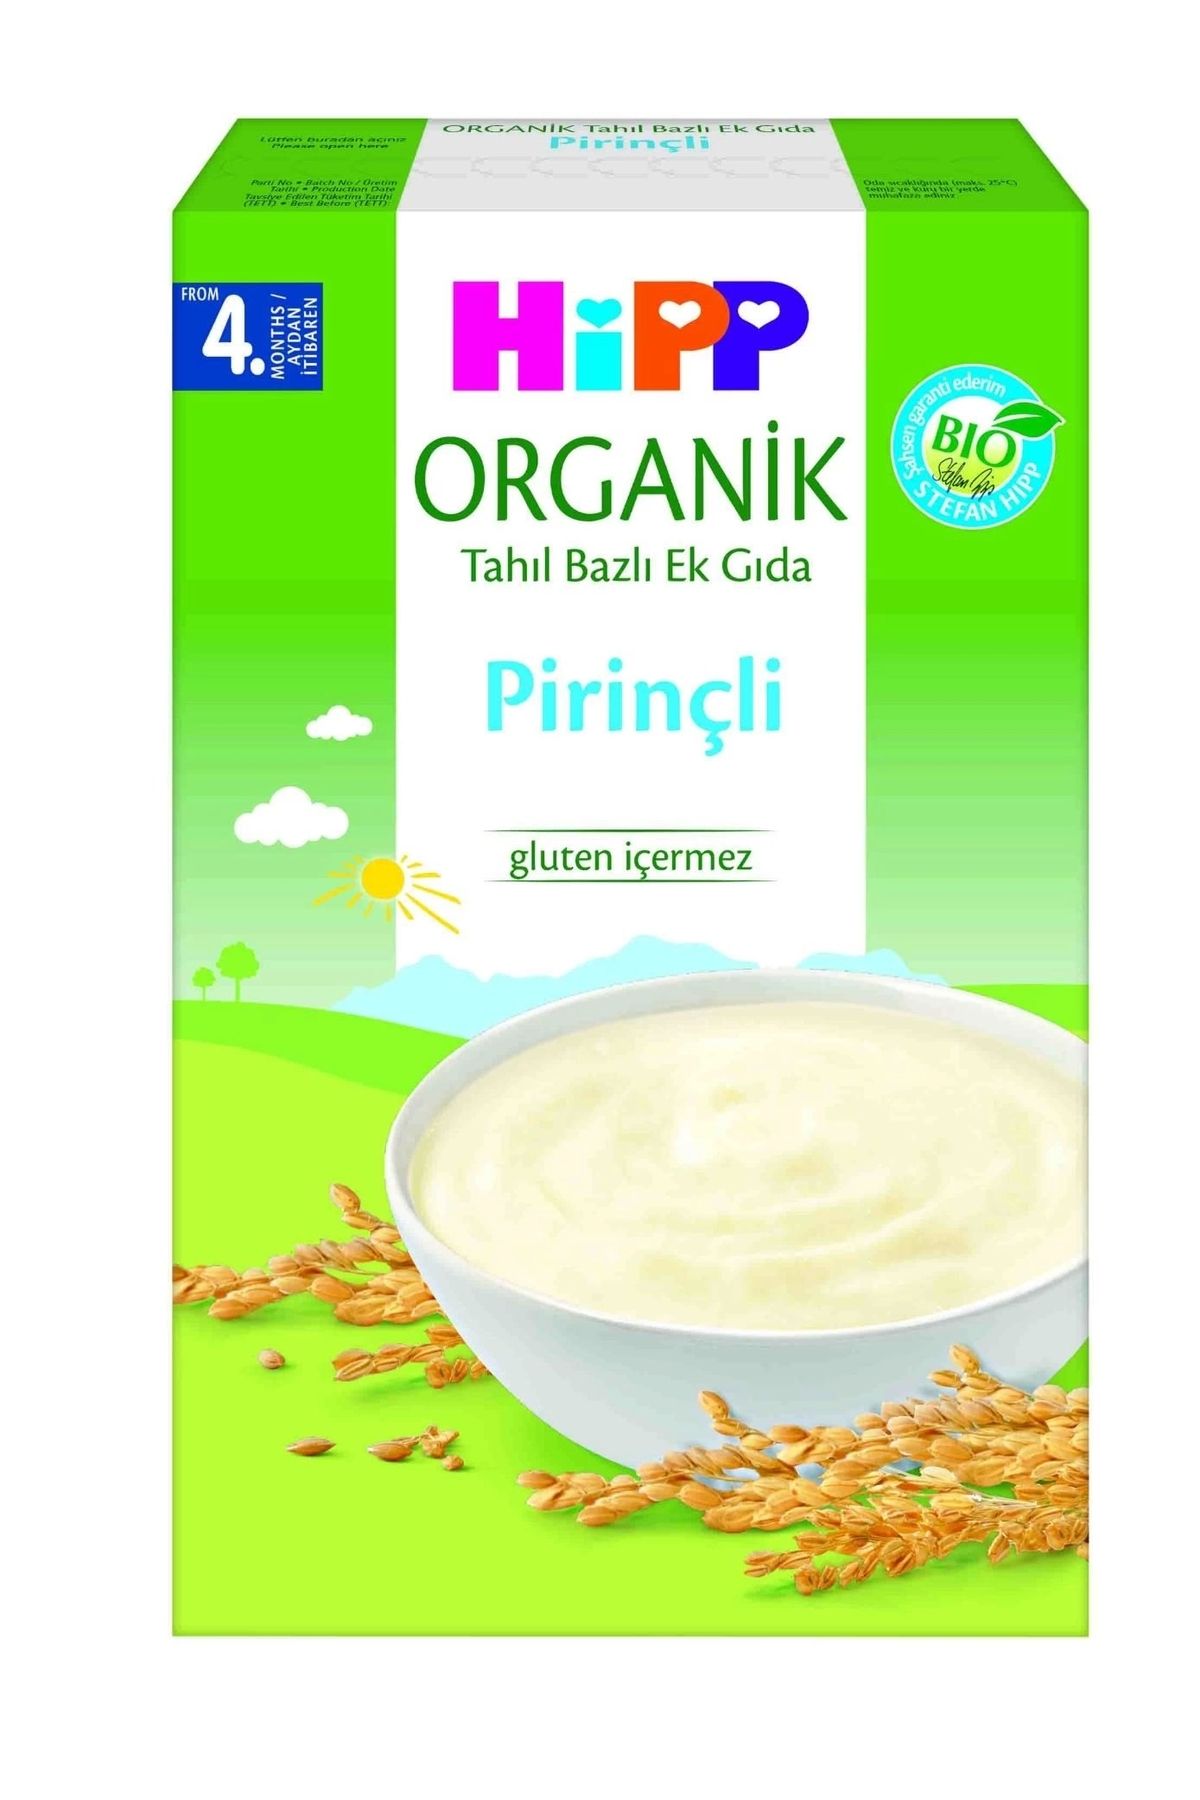 Hipp Organik Pirinçli Tahıl Bazlı Ek Gıda 200gr